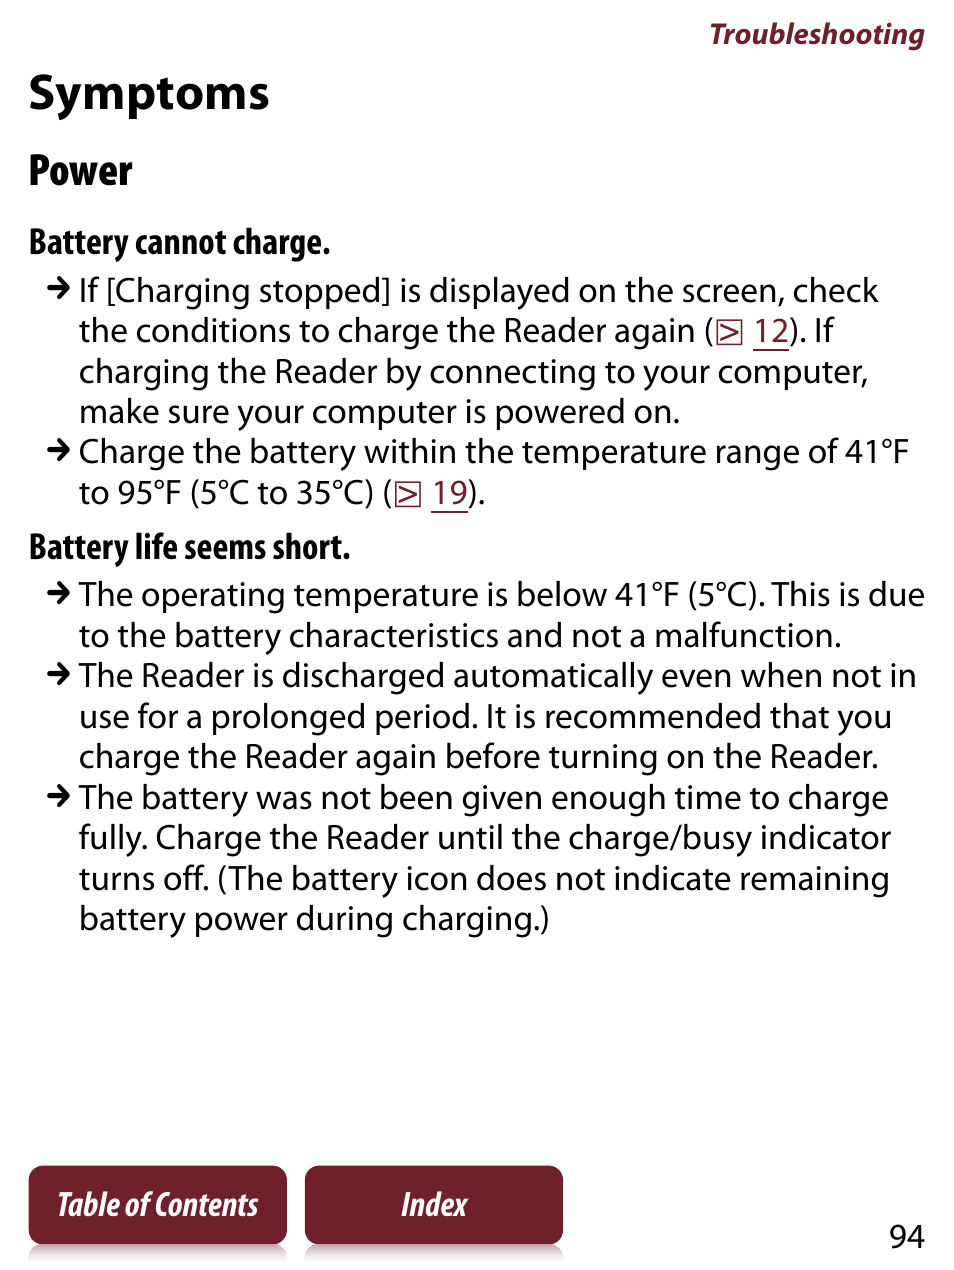 Symptoms, Power | Sony PRS-350 User Manual | Page 94 / 131